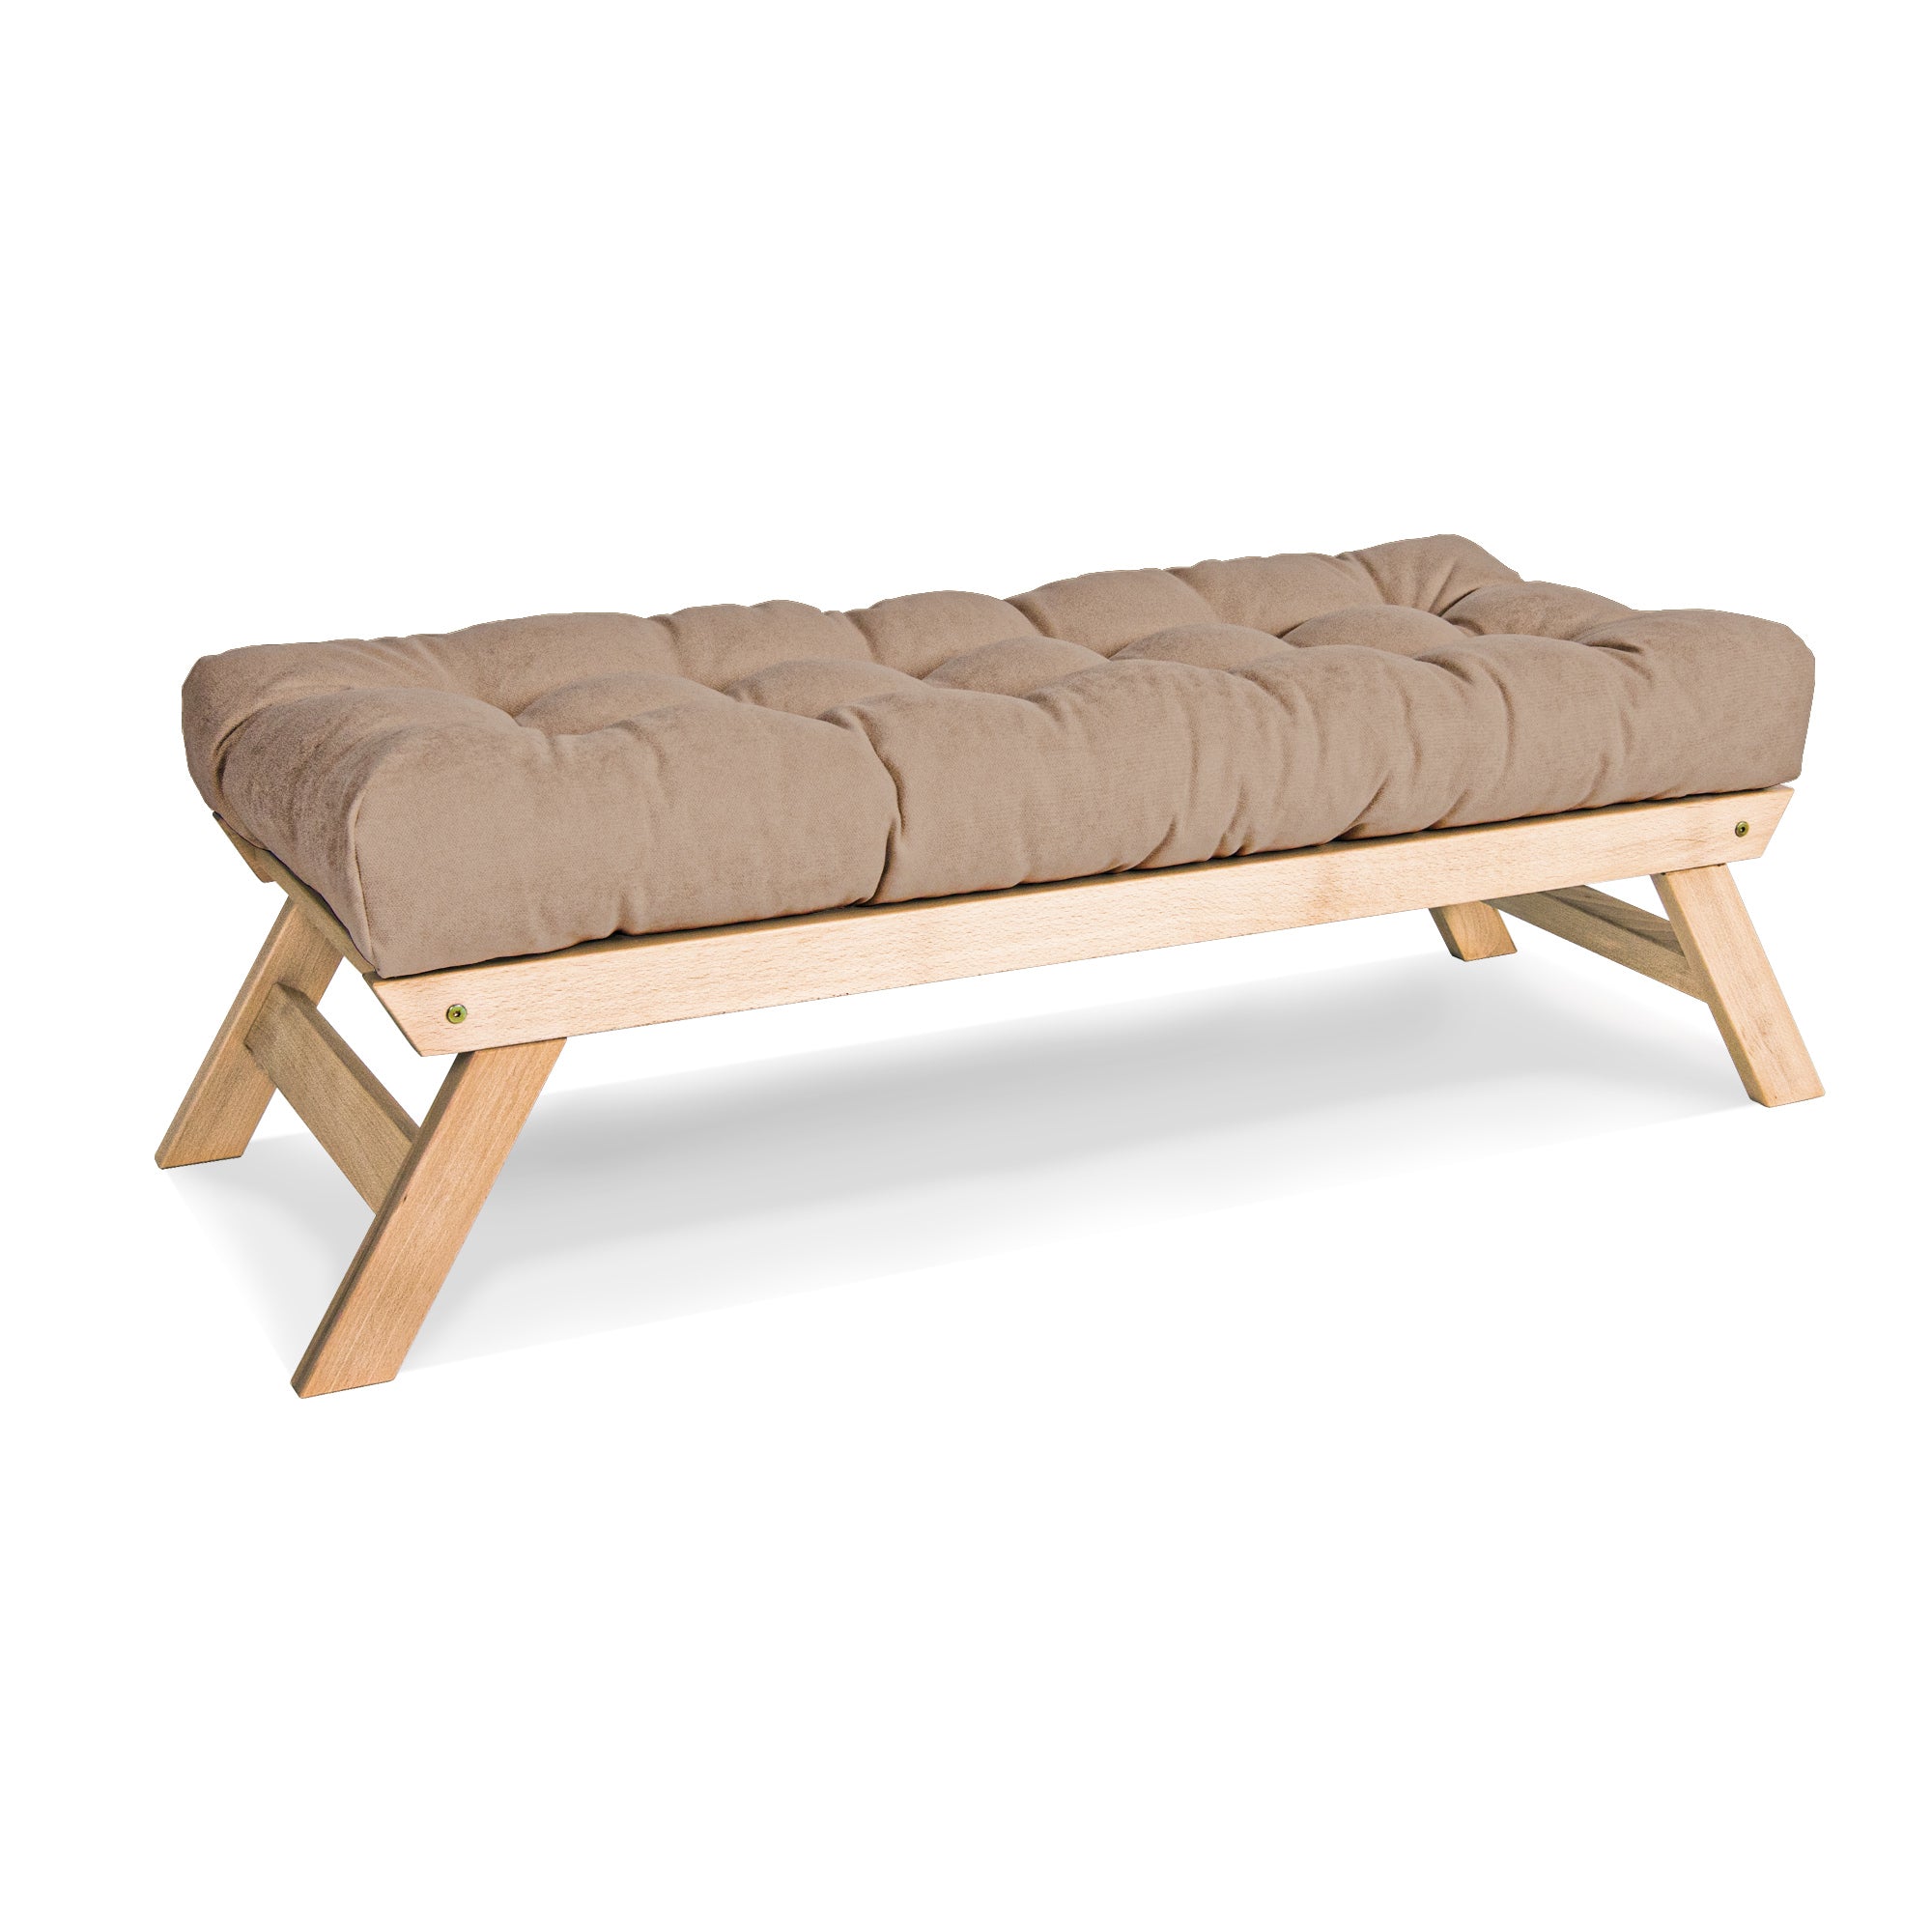 ALLEGRO Upholstered Bench Seat Beige & Graphite, Beech Wood